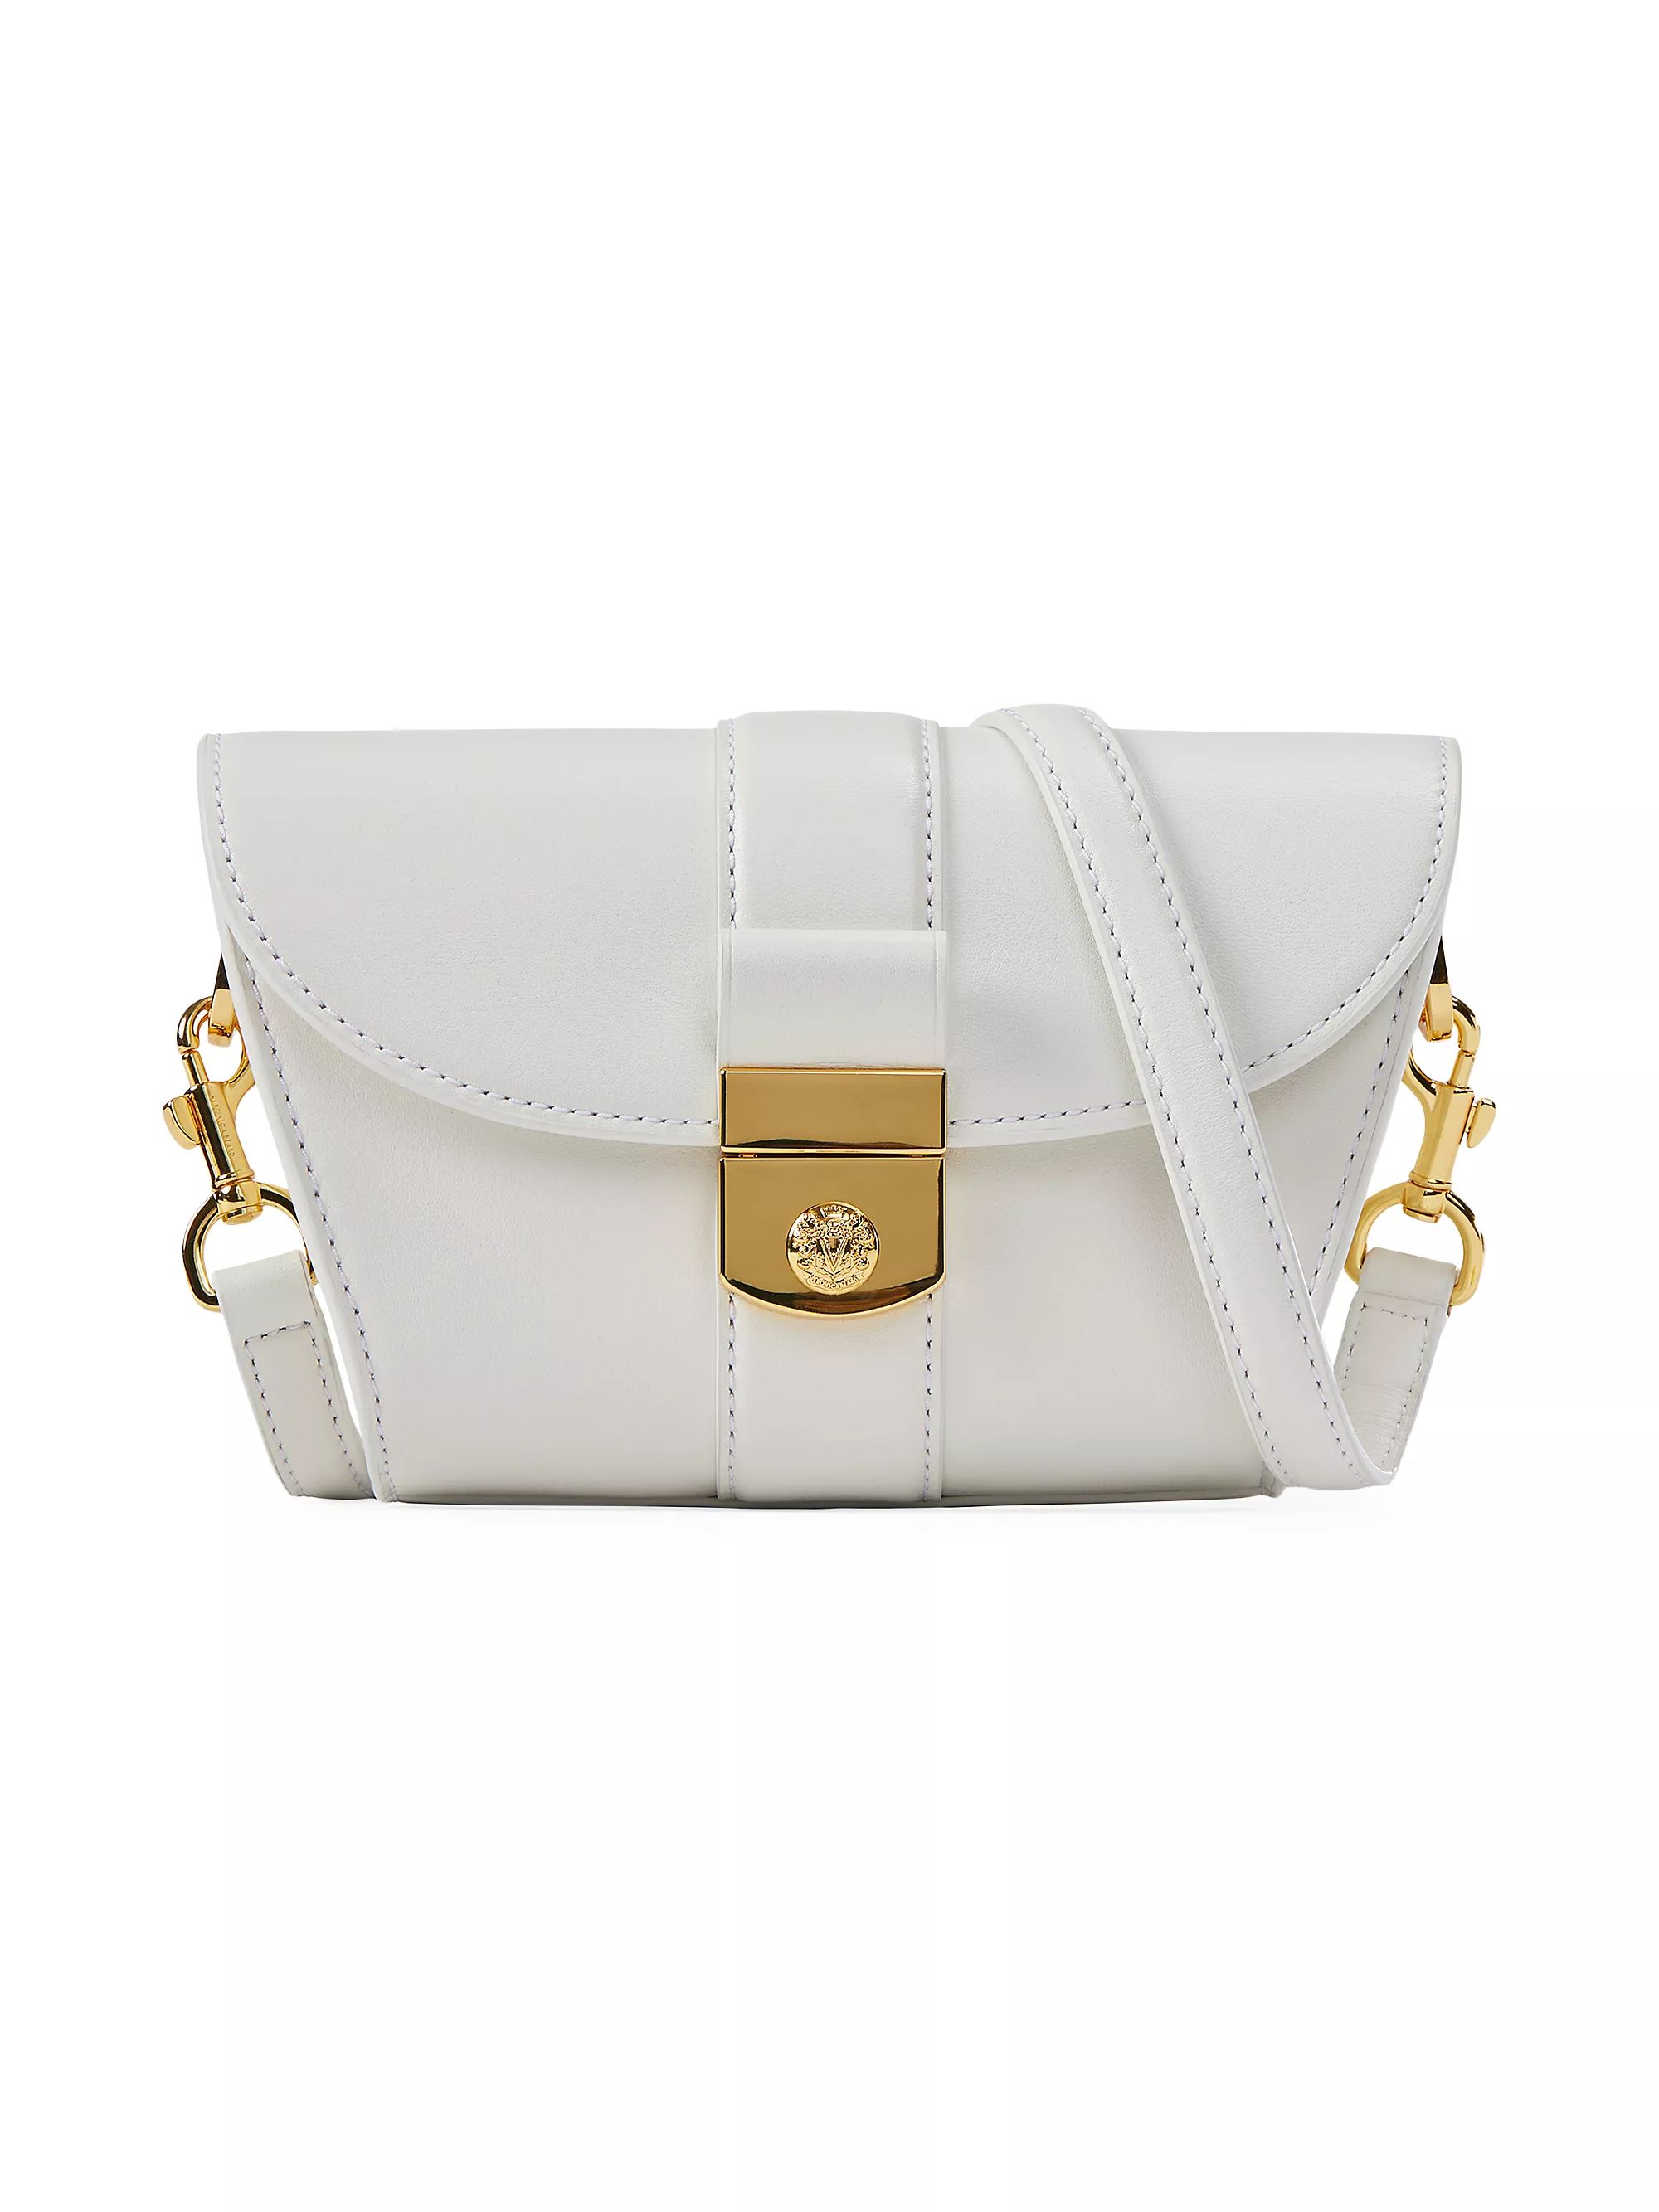 Shop Veronica Beard Small Leather Saddle Bag | Saks Fifth Avenue | Saks Fifth Avenue